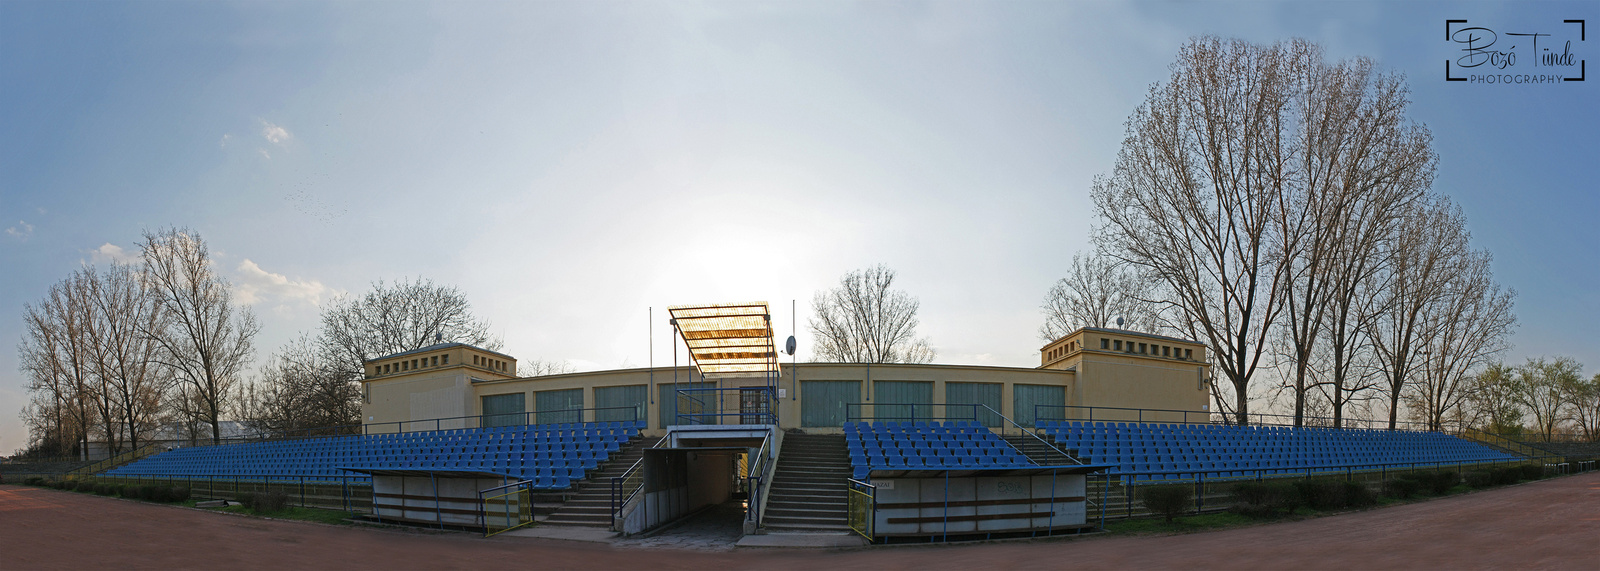 Városi stadion panoráma